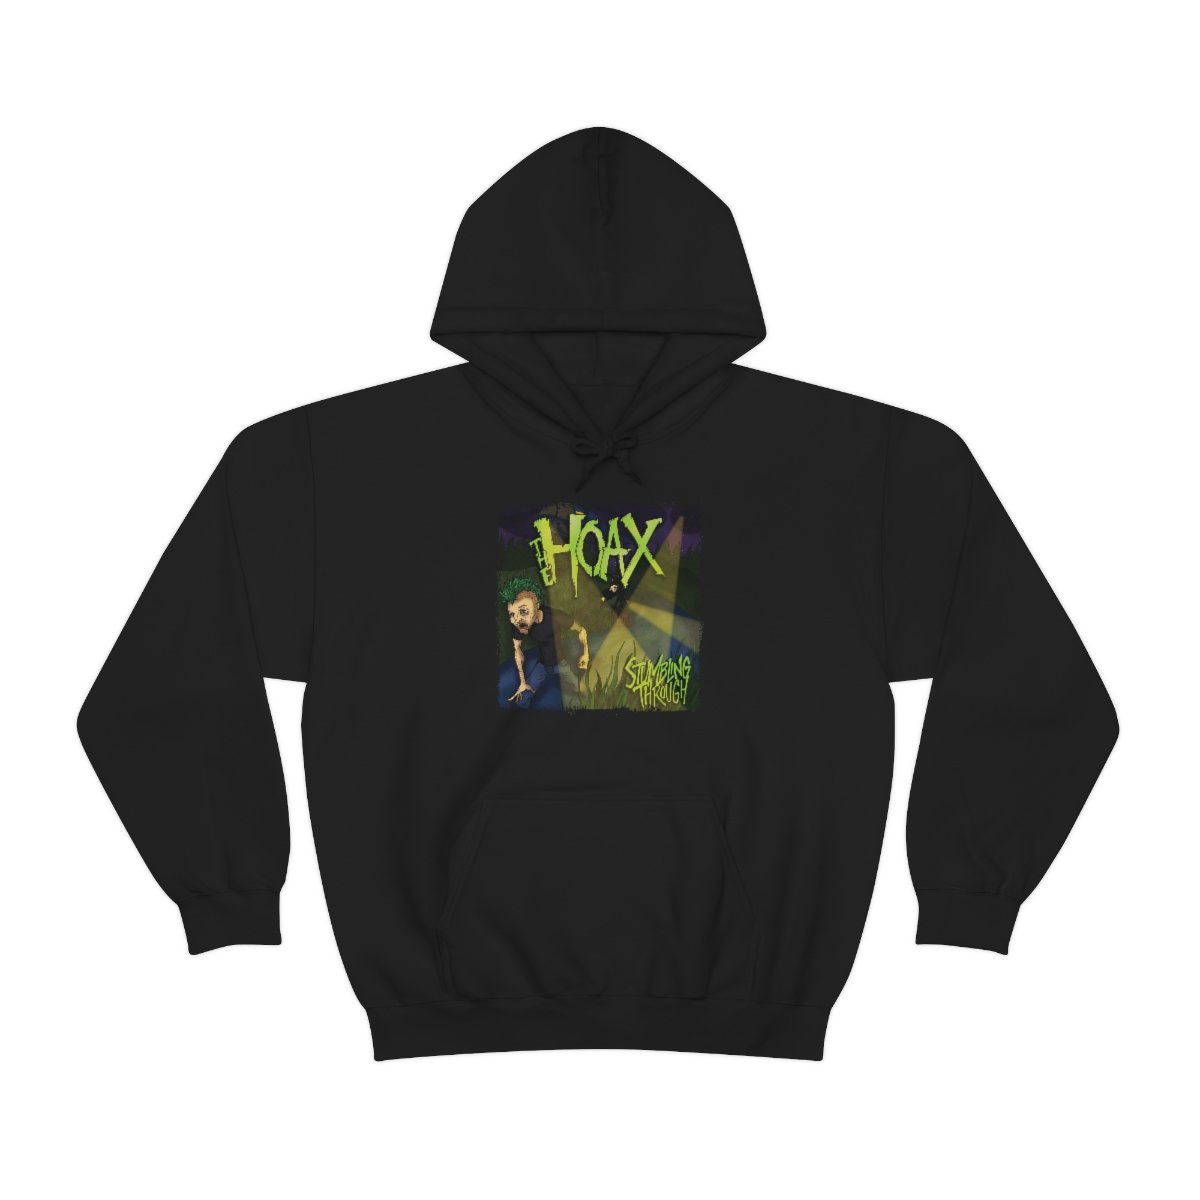 The Hoax – Stumbling Through (TPR) Pullover Hooded Sweatshirt